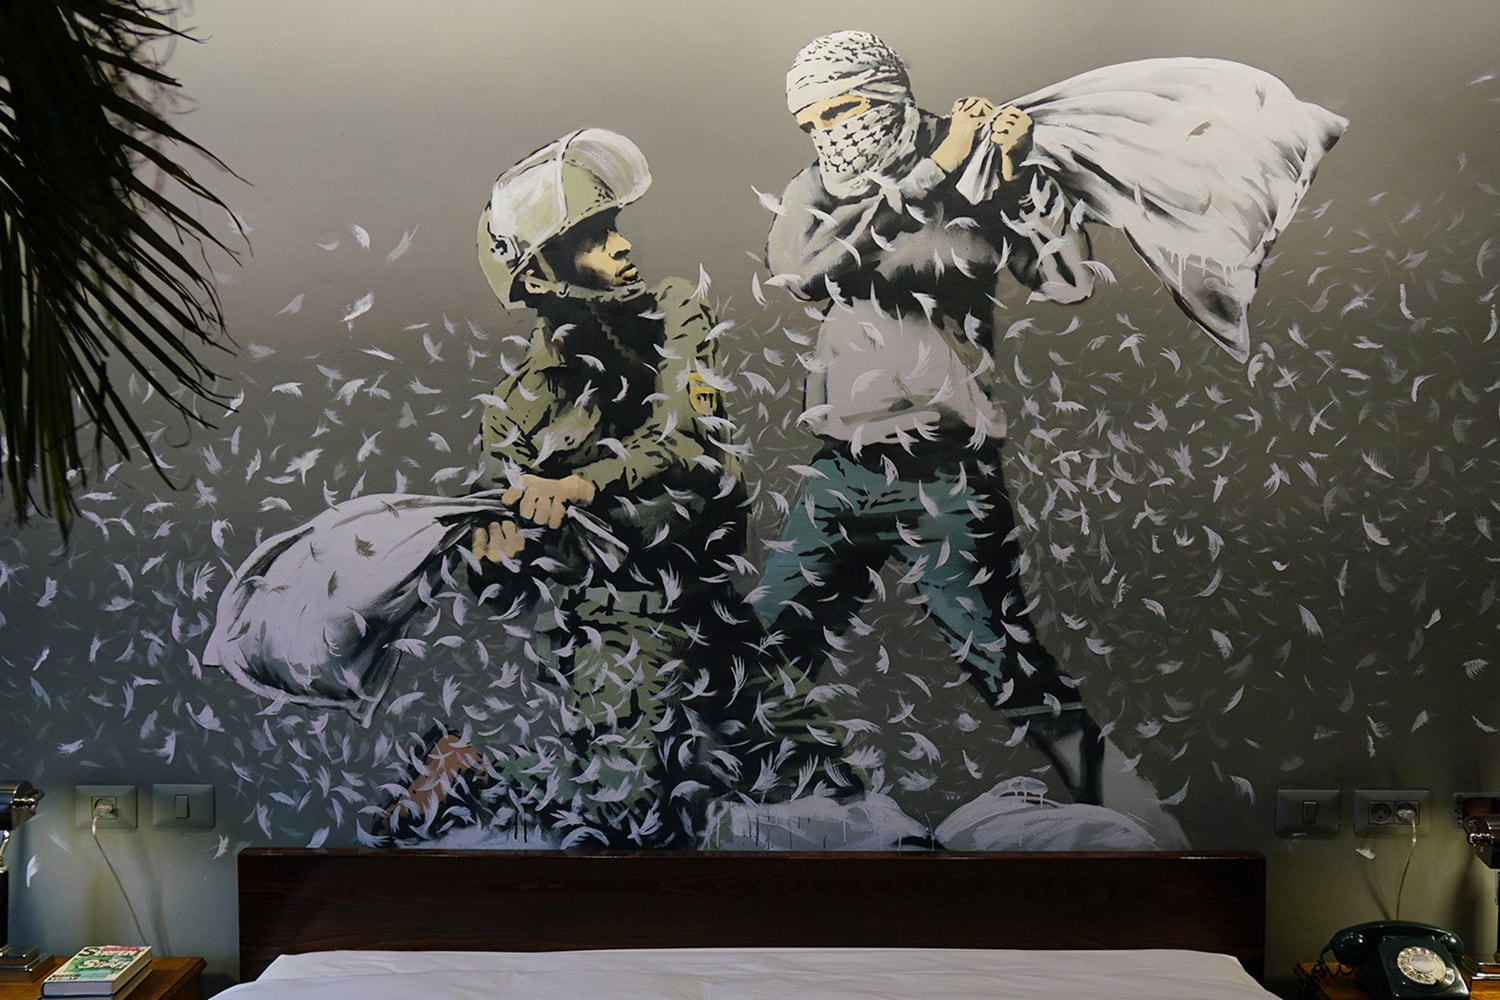 Banksy Walled Off Hotel Gift Shop Art Artwork Sculpture Daniel Arsham Future Relic 08 Tom Sachs Objects of Devotion Ari Marcopoulos Machine Frank Elbaz Gallery